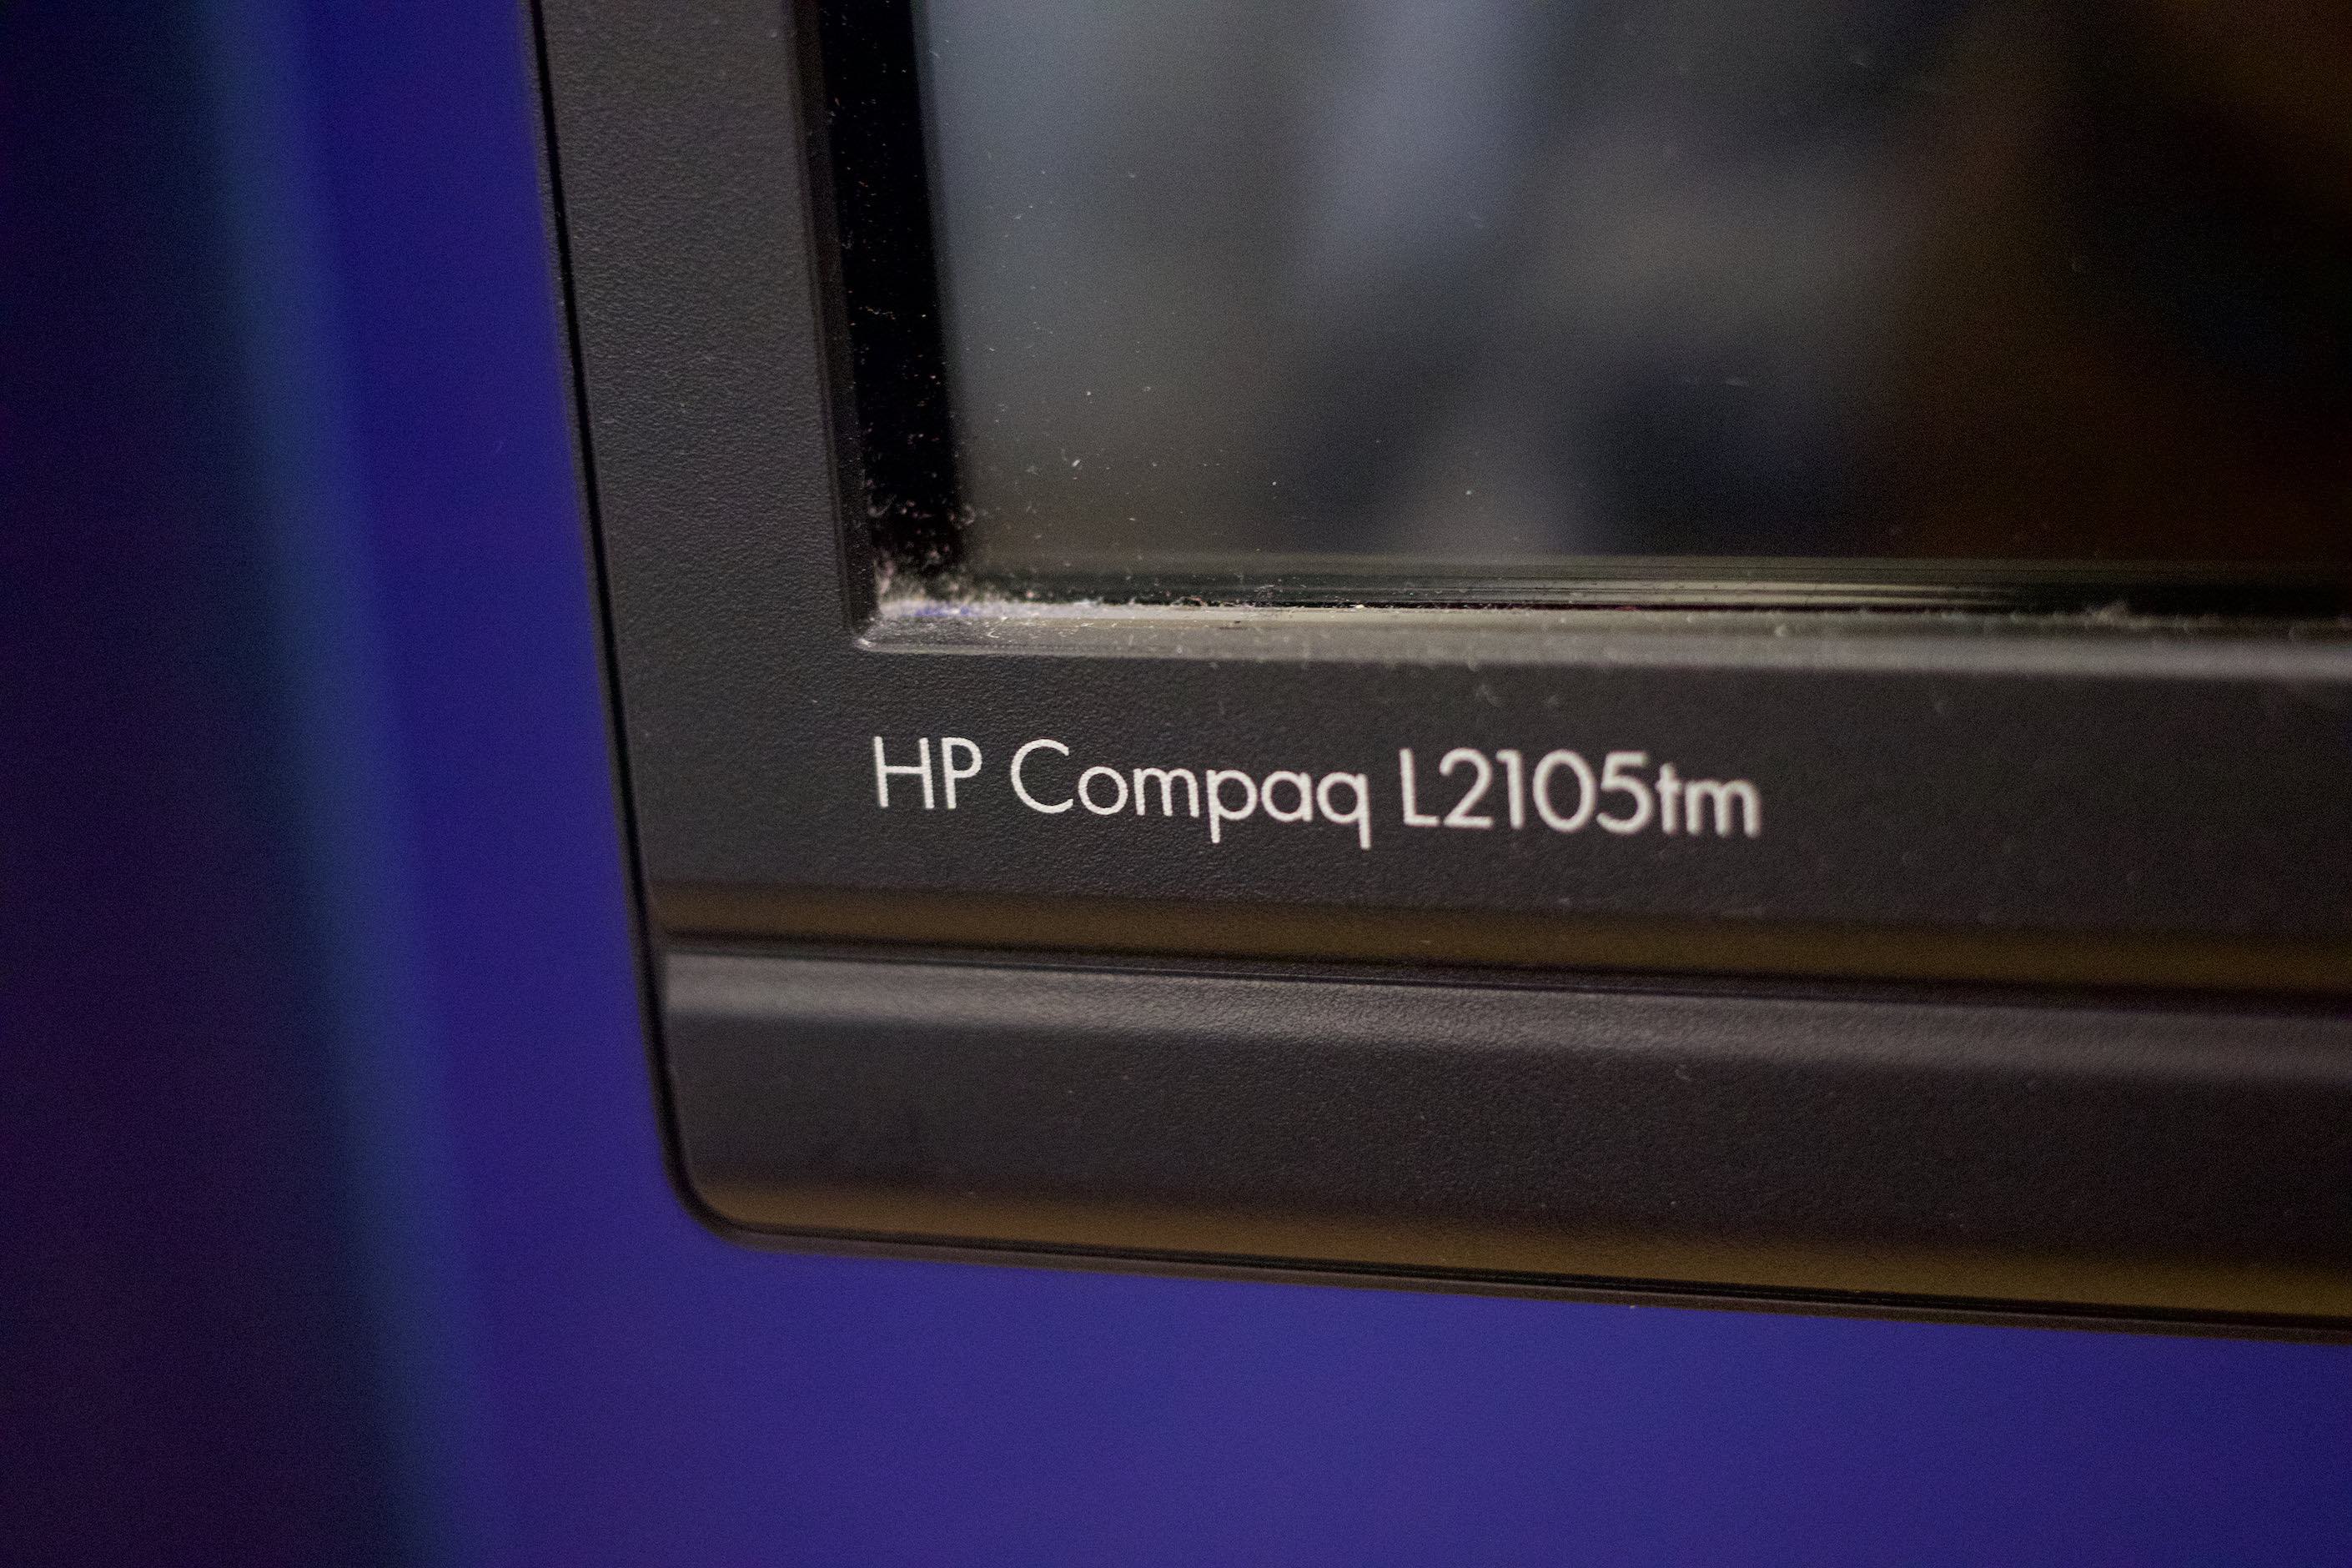 'HP Compaq L2105tm' printed on the bezel of display.